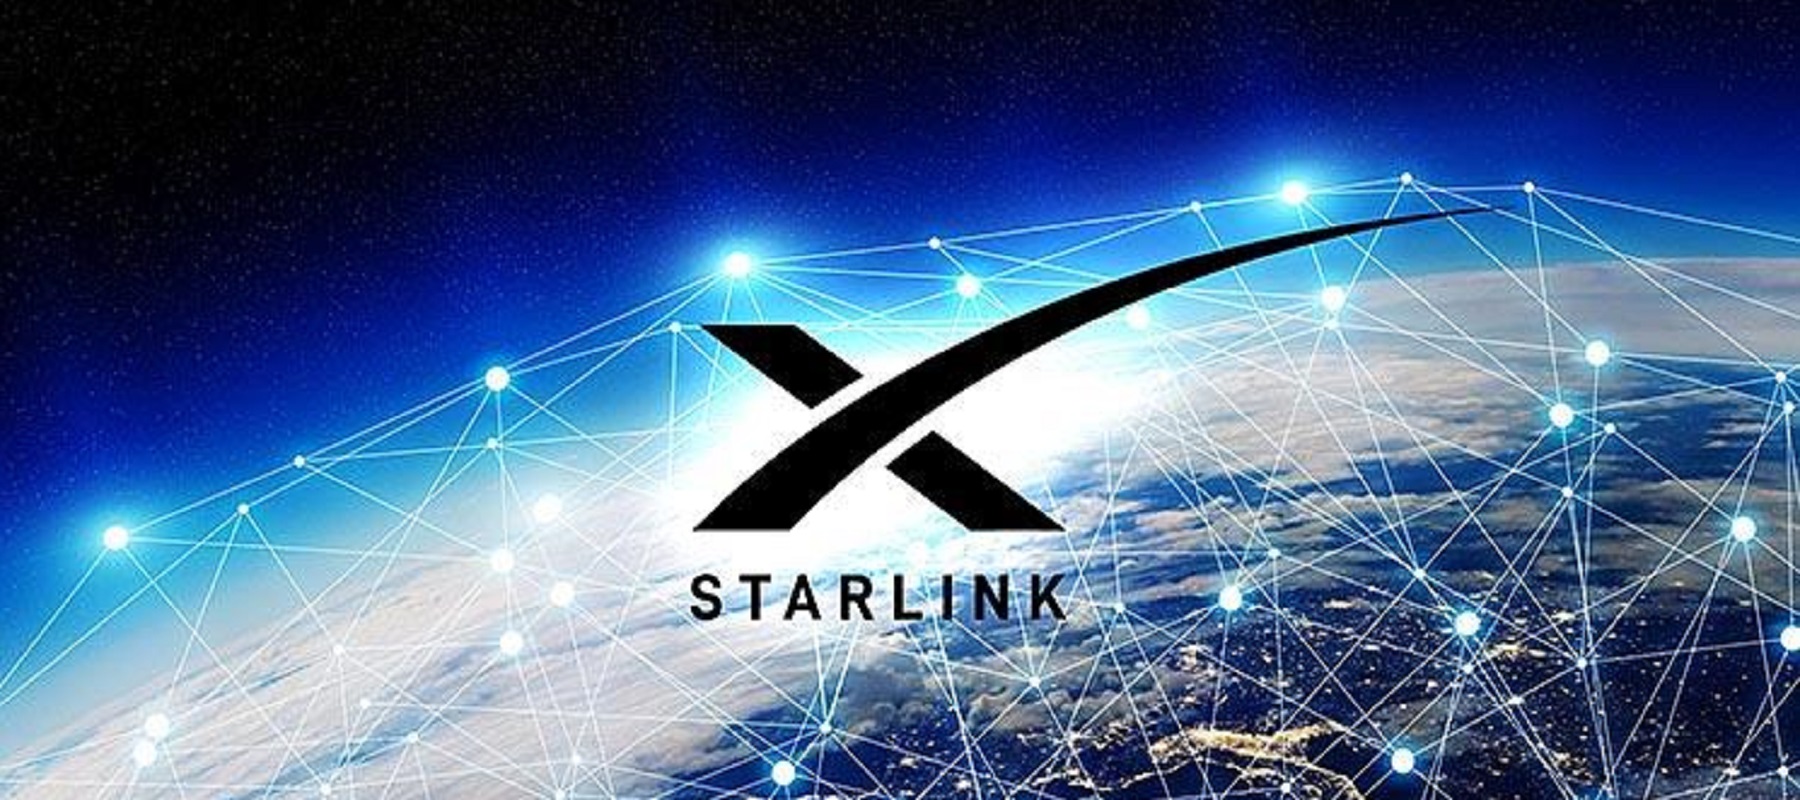 Elon Musk’s internet firm Starlink picks Karibu Connect as its authorized reseller in Kenya